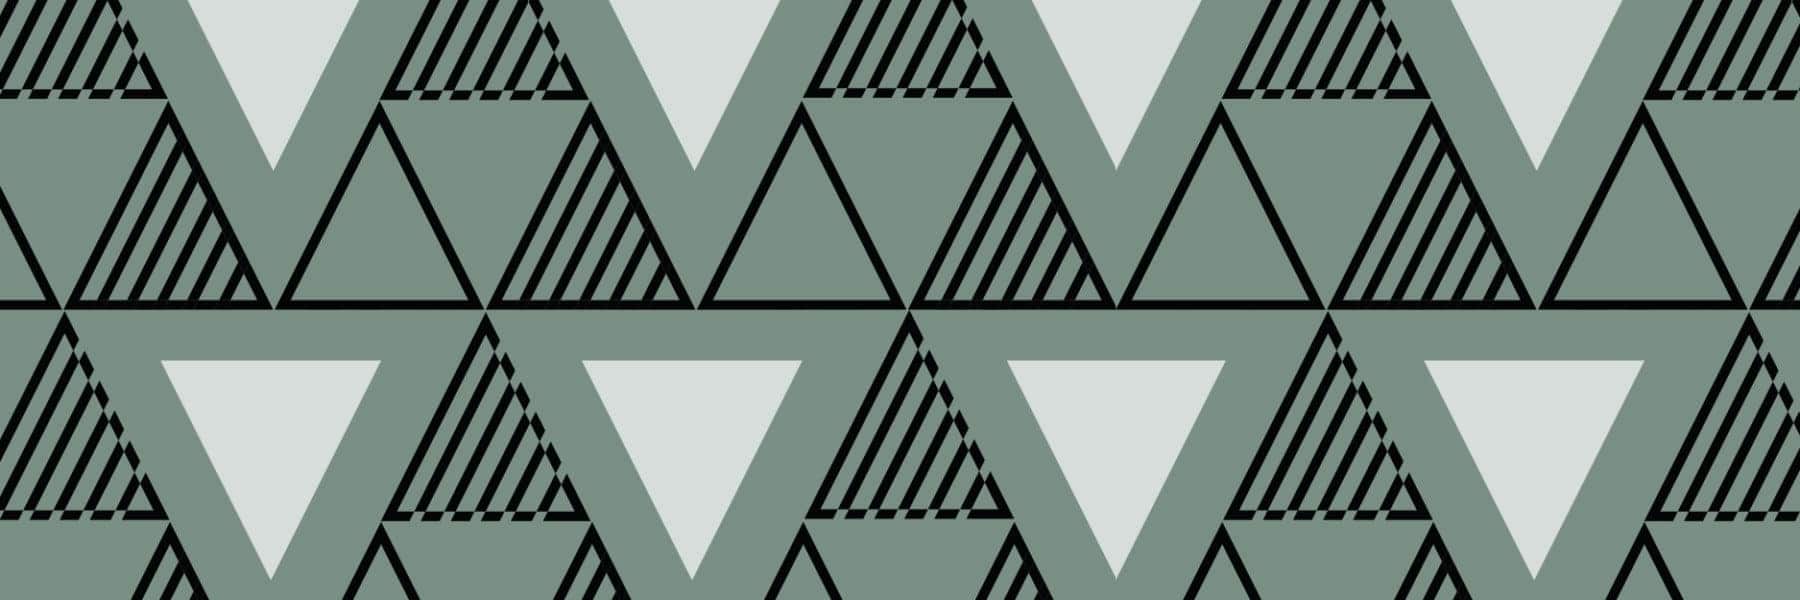 Wallpaper and furnishing textiles: Geometric Patterns